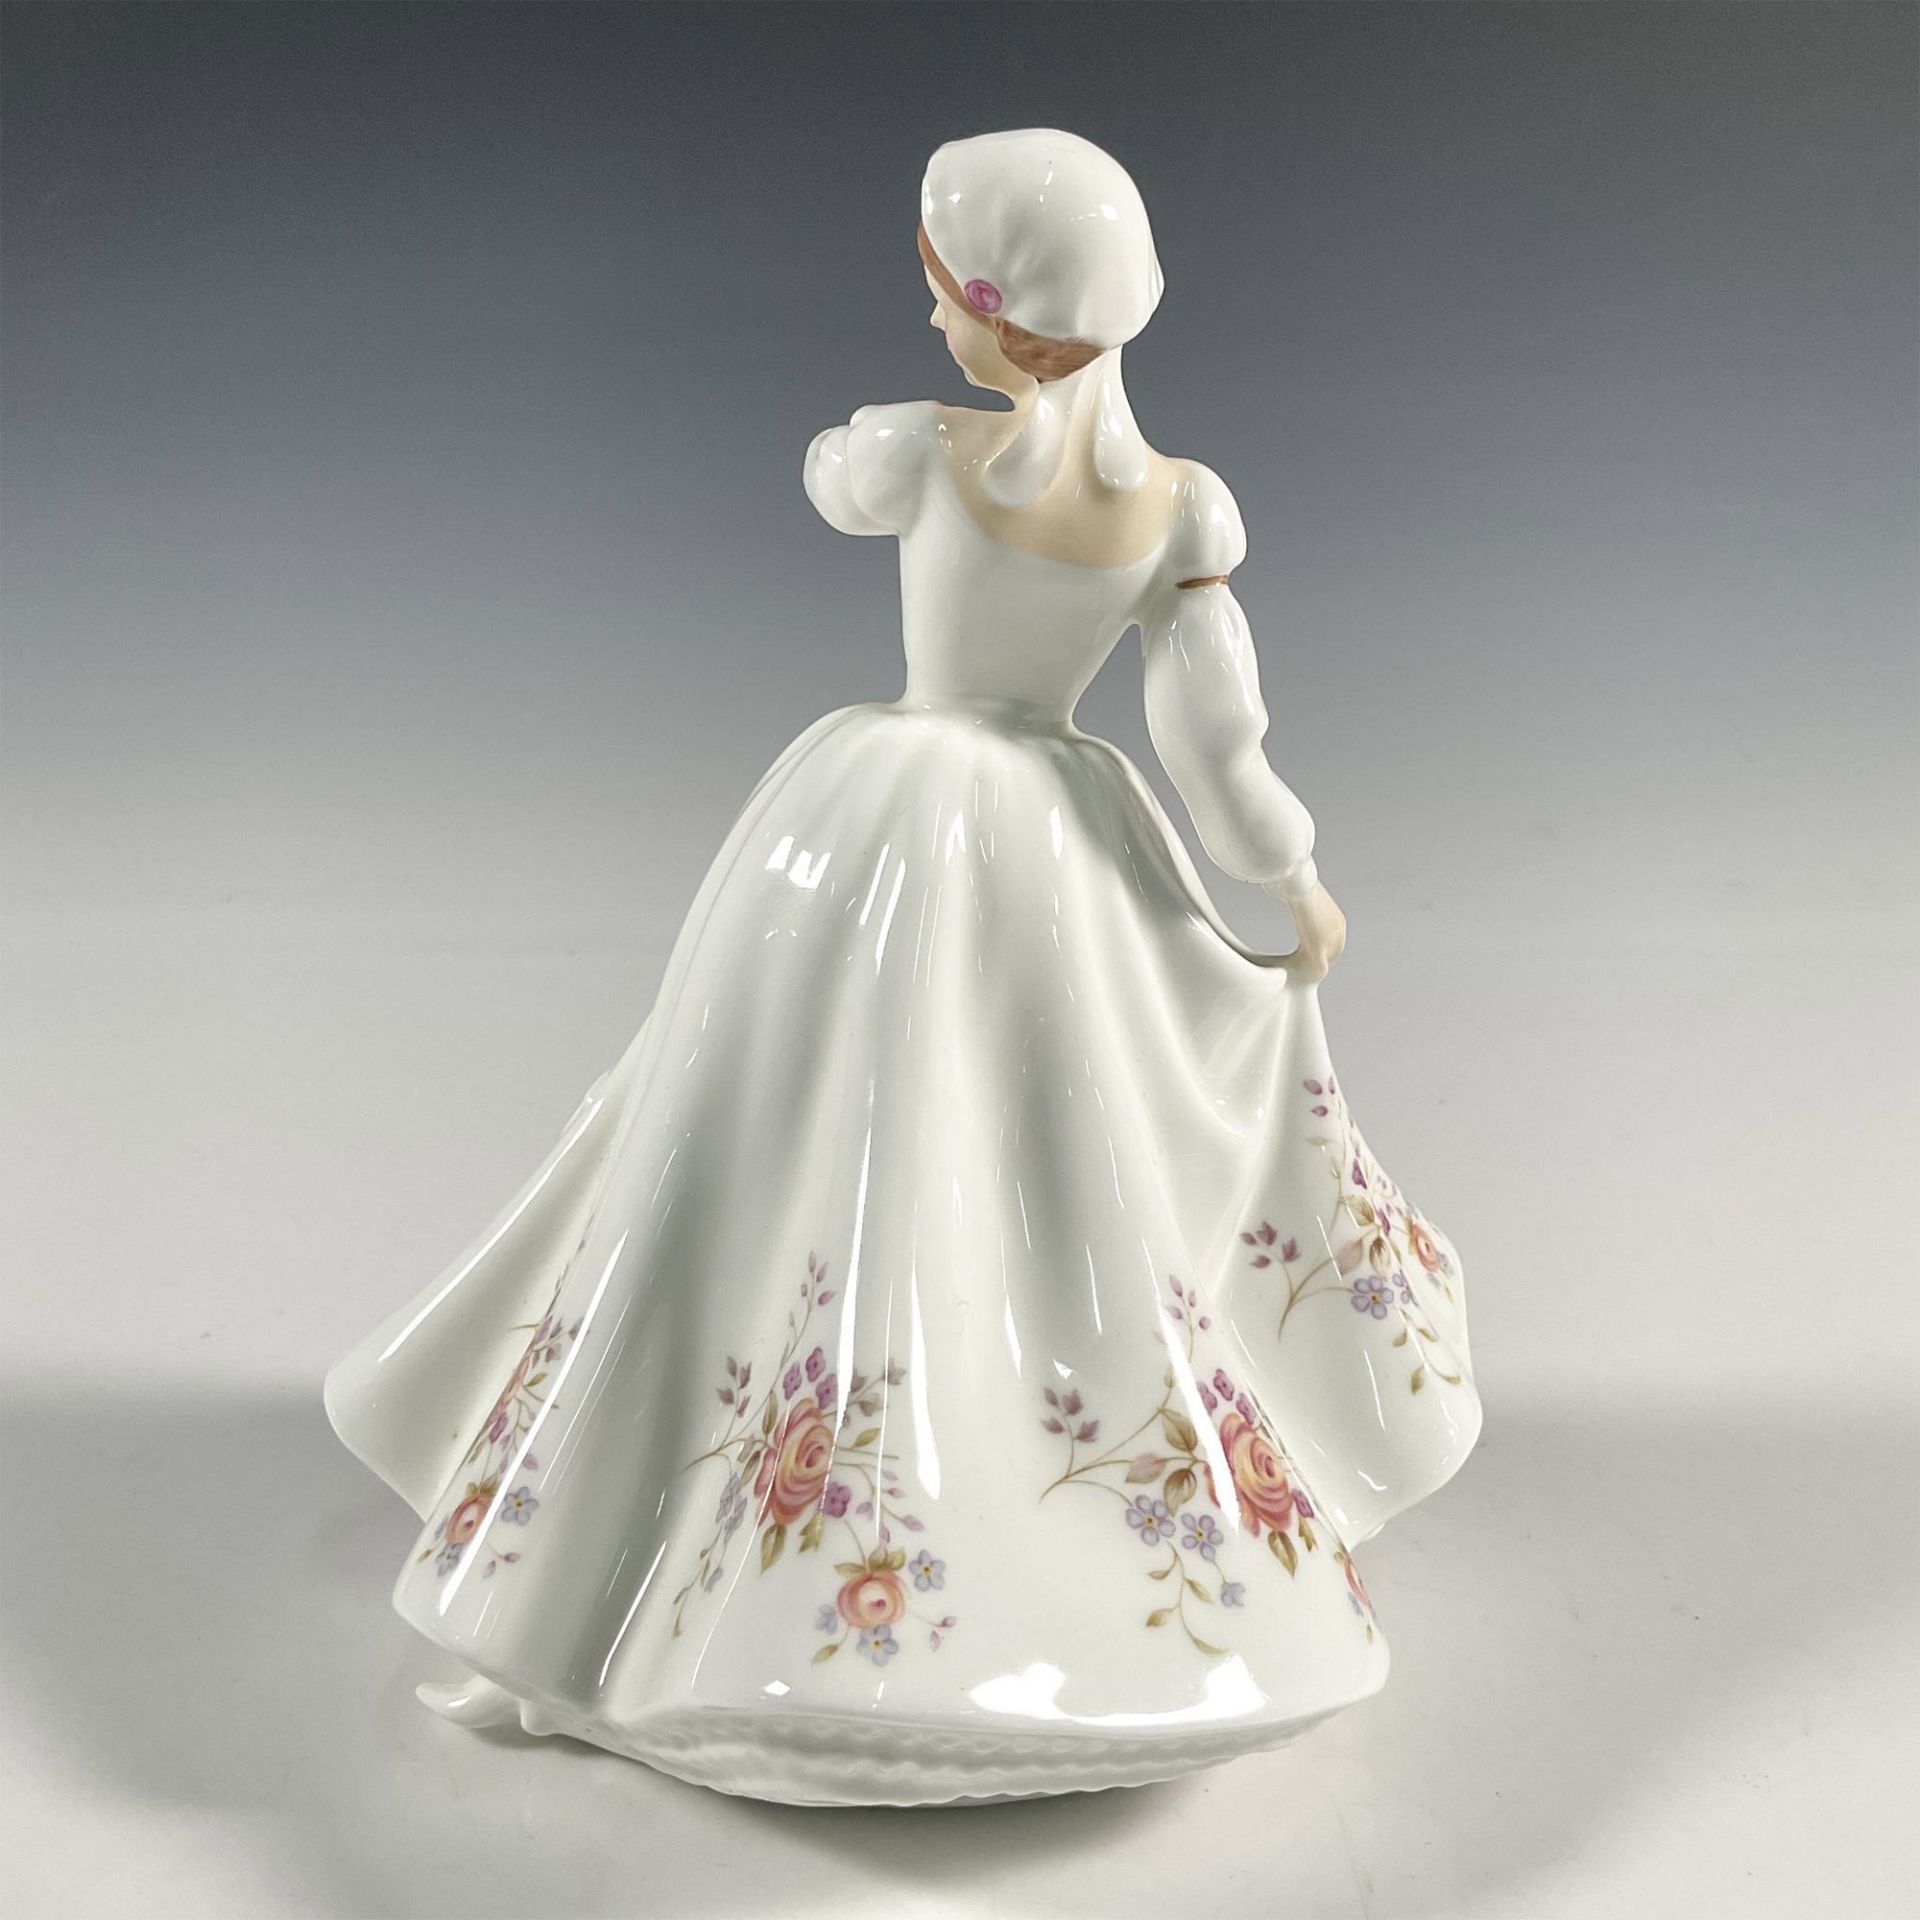 Rosemary HN3143 - Royal Doulton Figurine - Image 2 of 3